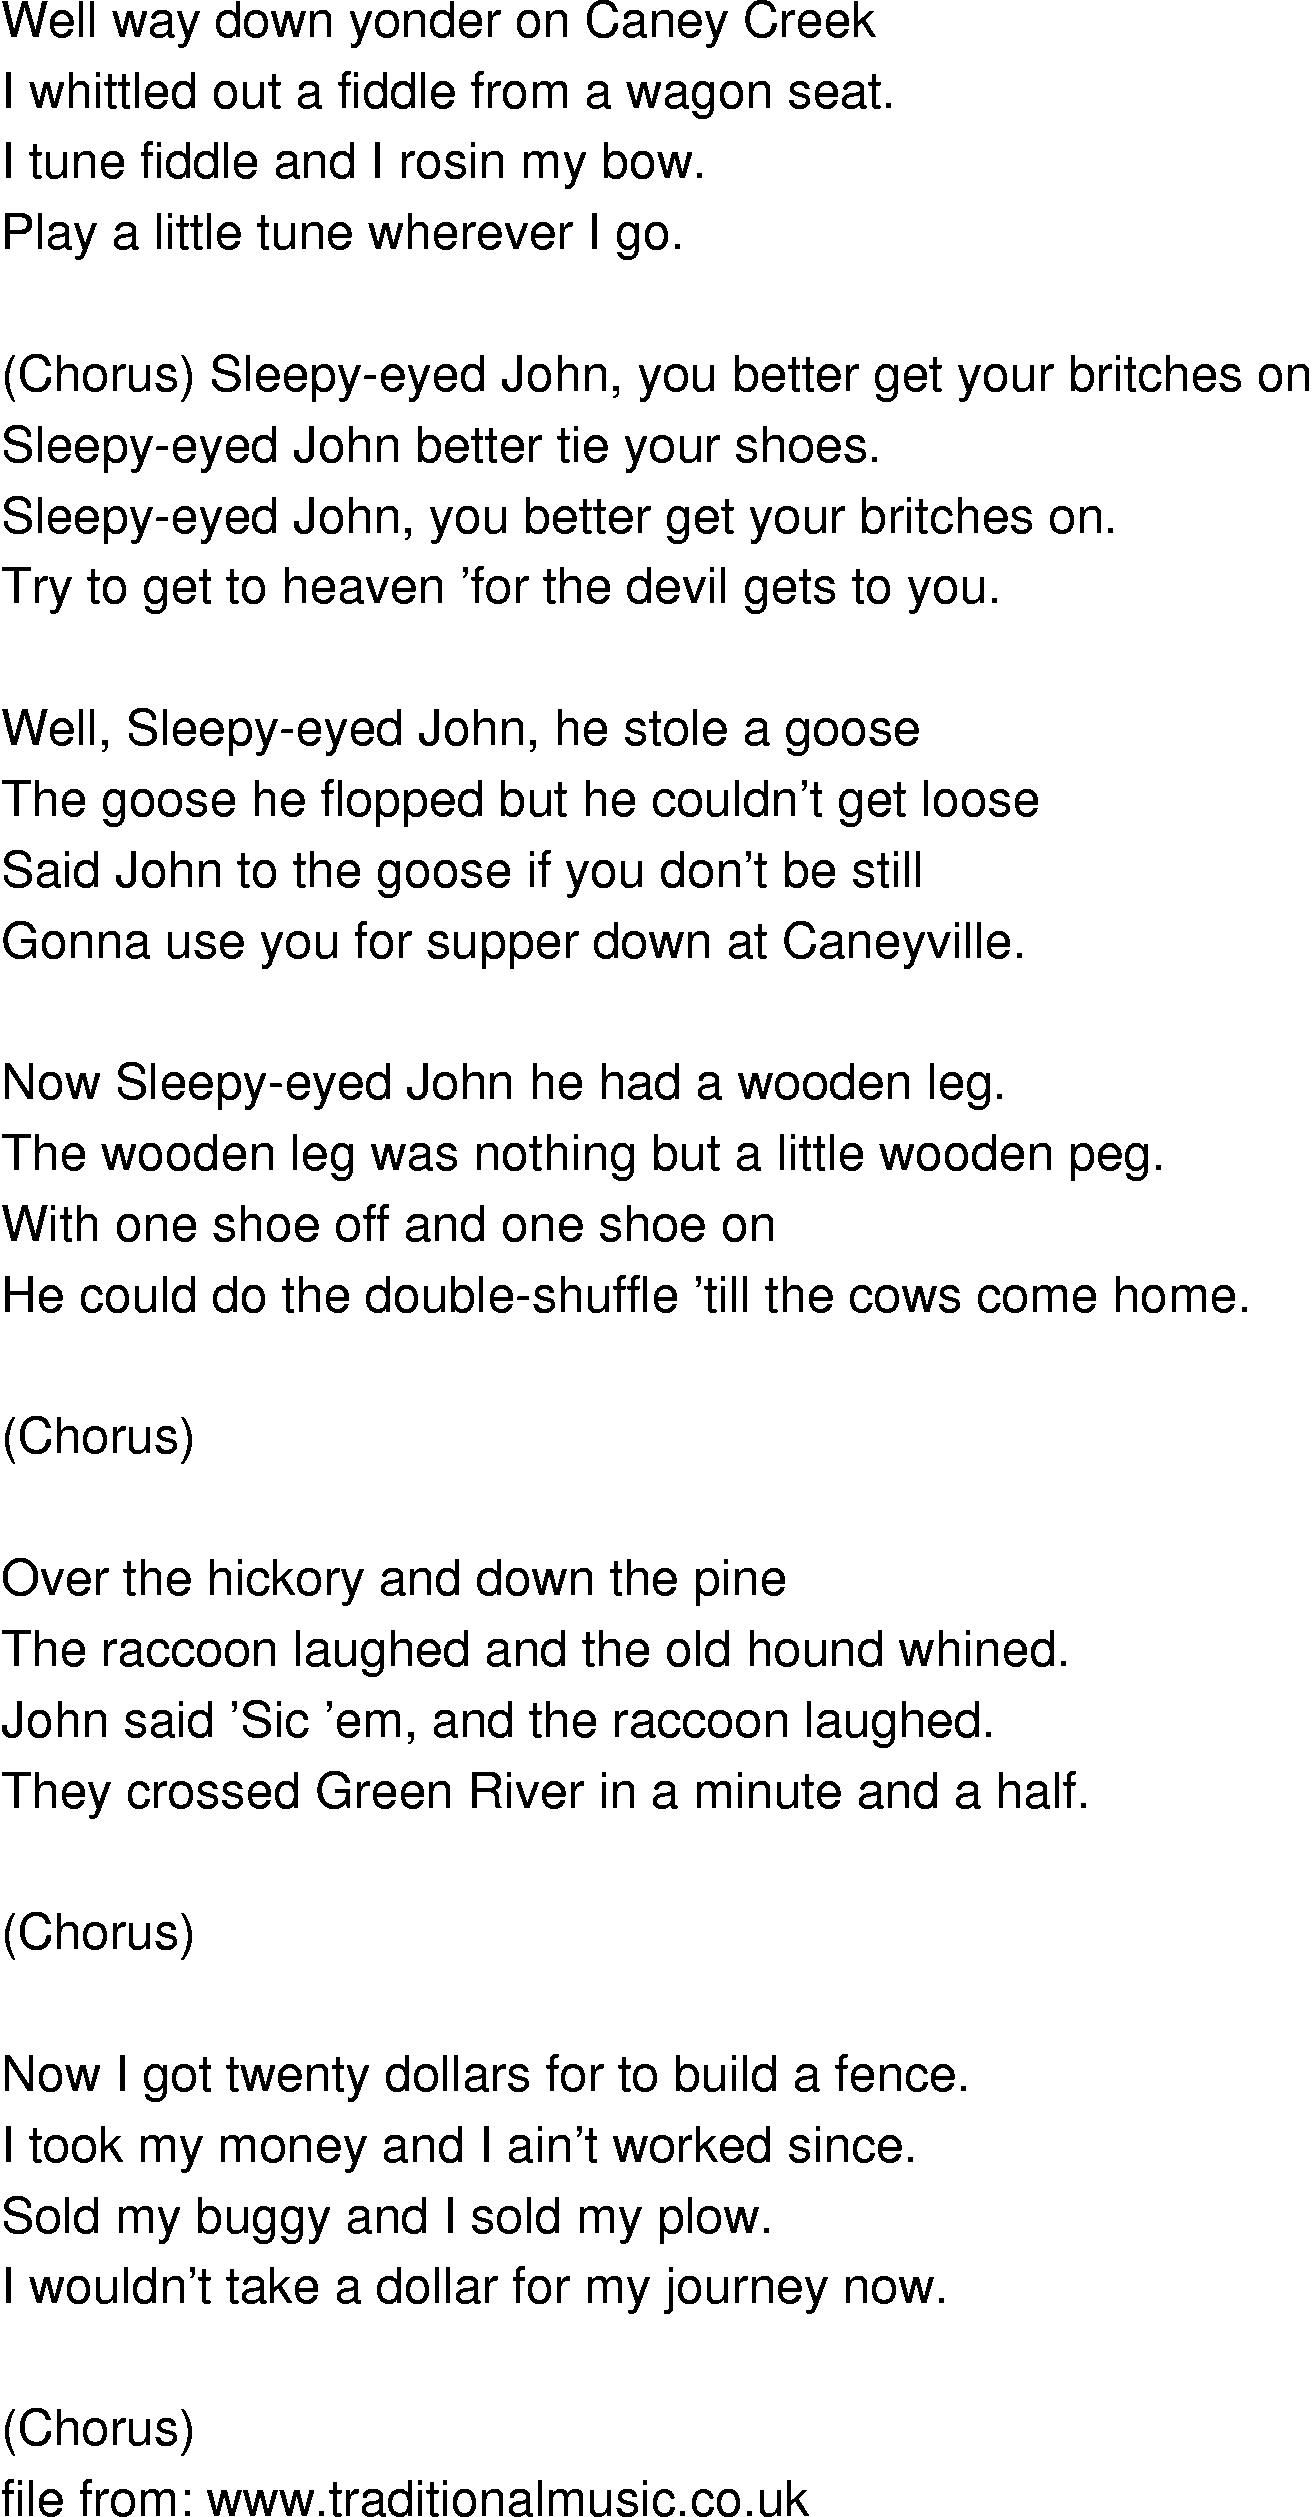 Old-Time (oldtimey) Song Lyrics - sleepy eyed john